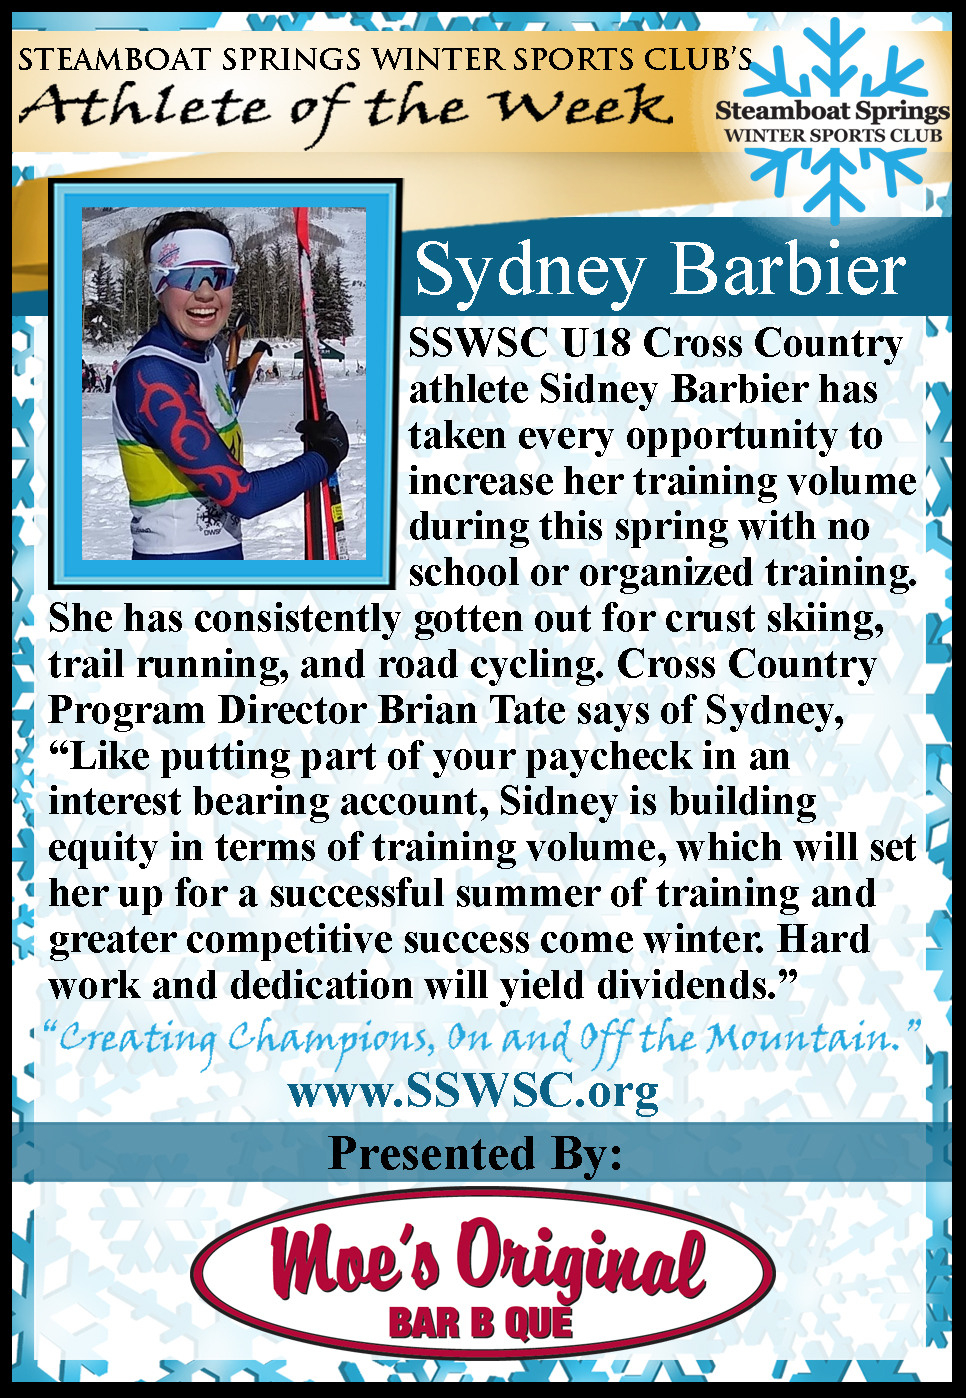 Athlete of the Week, Sydney Barbier